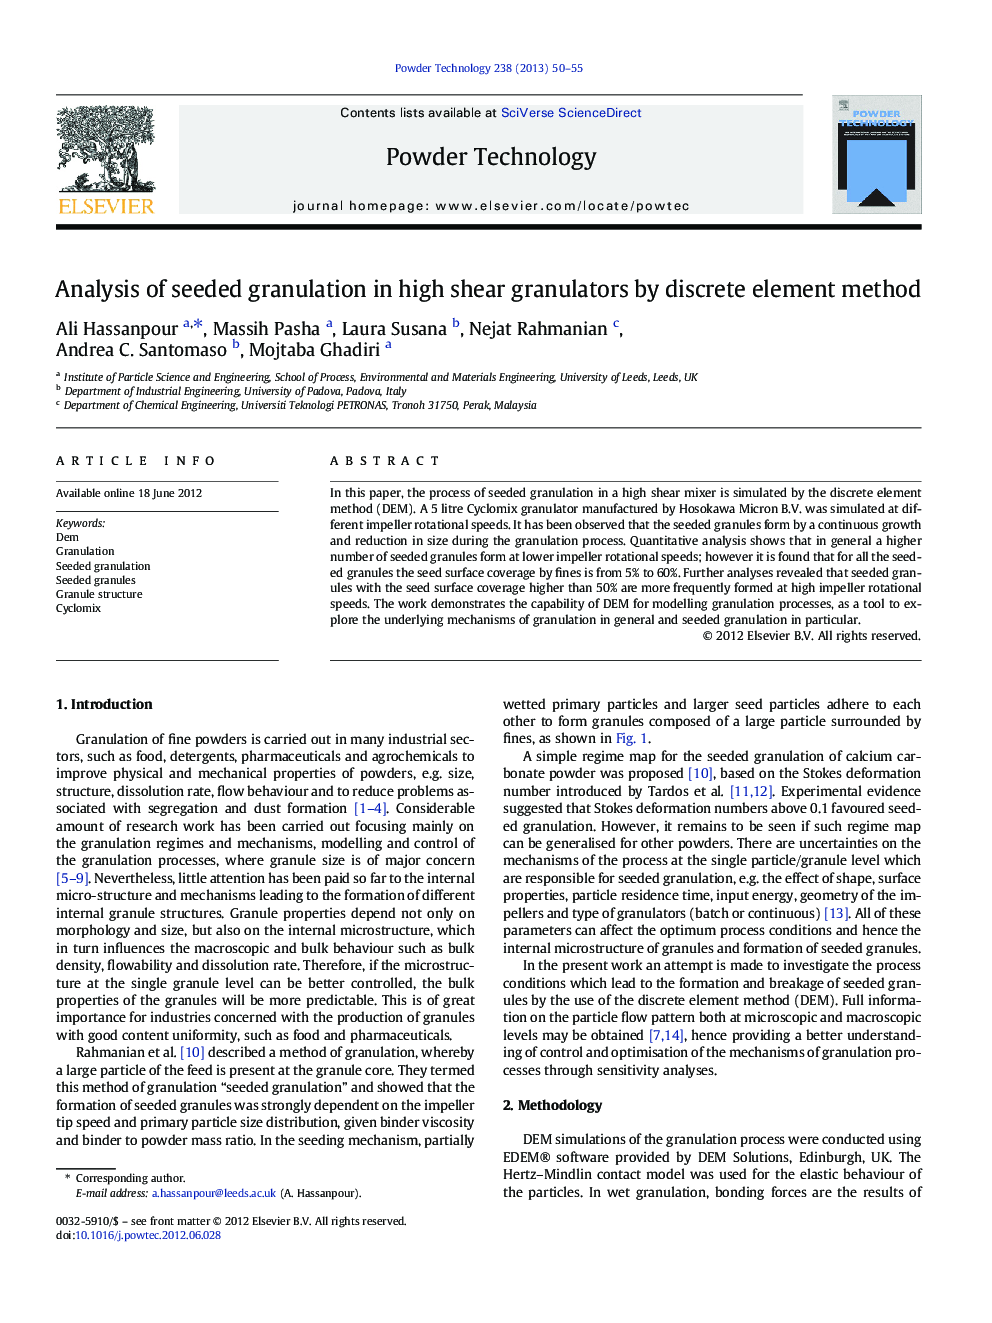 Analysis of seeded granulation in high shear granulators by discrete element method